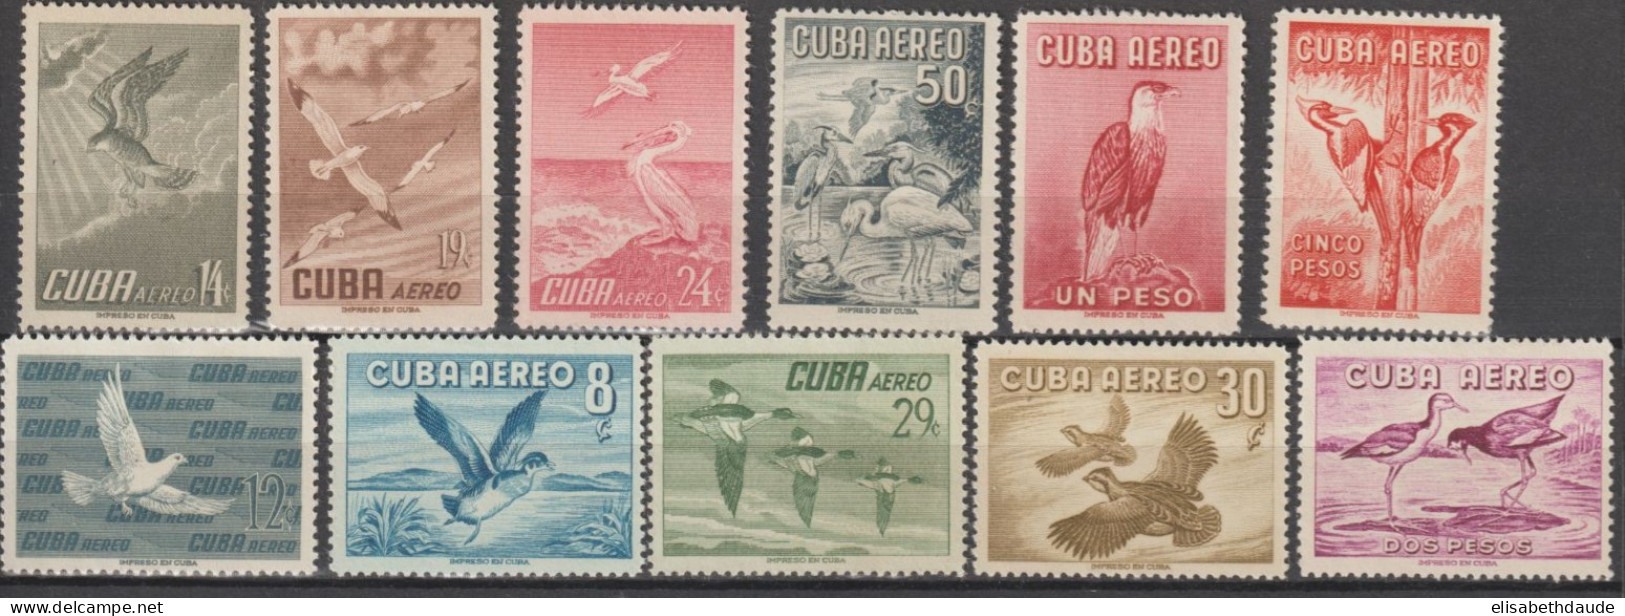 C UBA - 1957 - POSTE AERIENNE - SERIE COMPLETE OISEAUX / BIRDS YVERT N°135/145 ** / * MNH / MLH - COTE YVERT = 90 EUR - Poste Aérienne